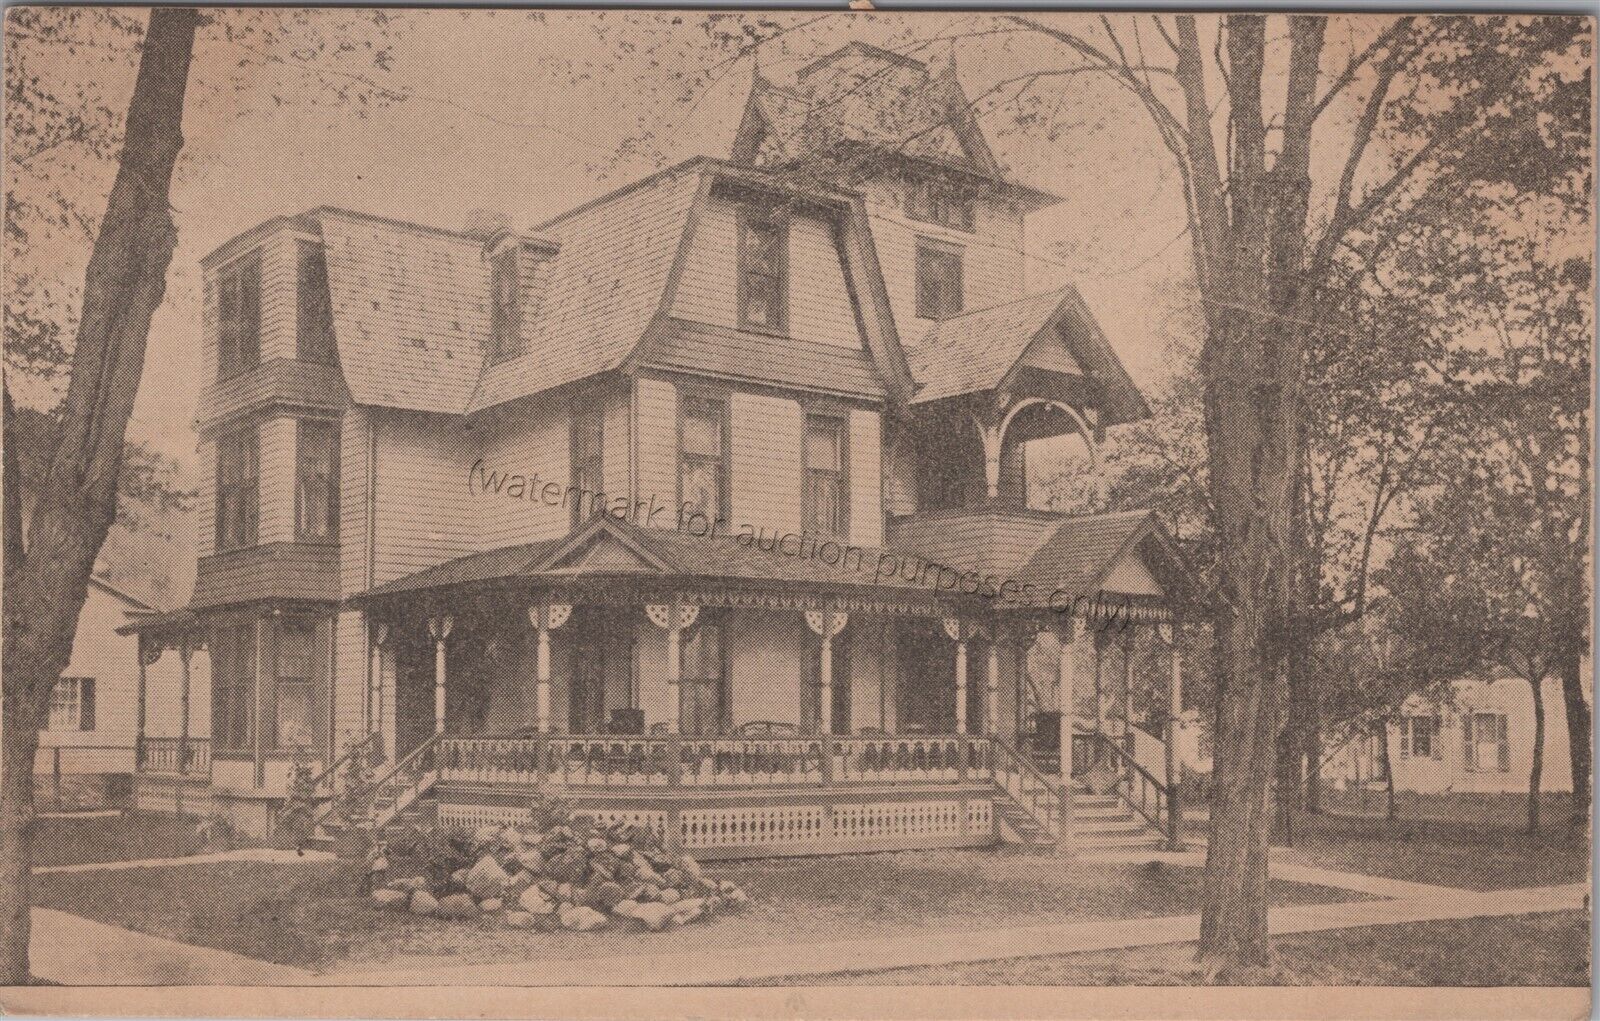 Watkins, NY: Roe Summer Cottage - Vintage Schuyler County, New York Postcard